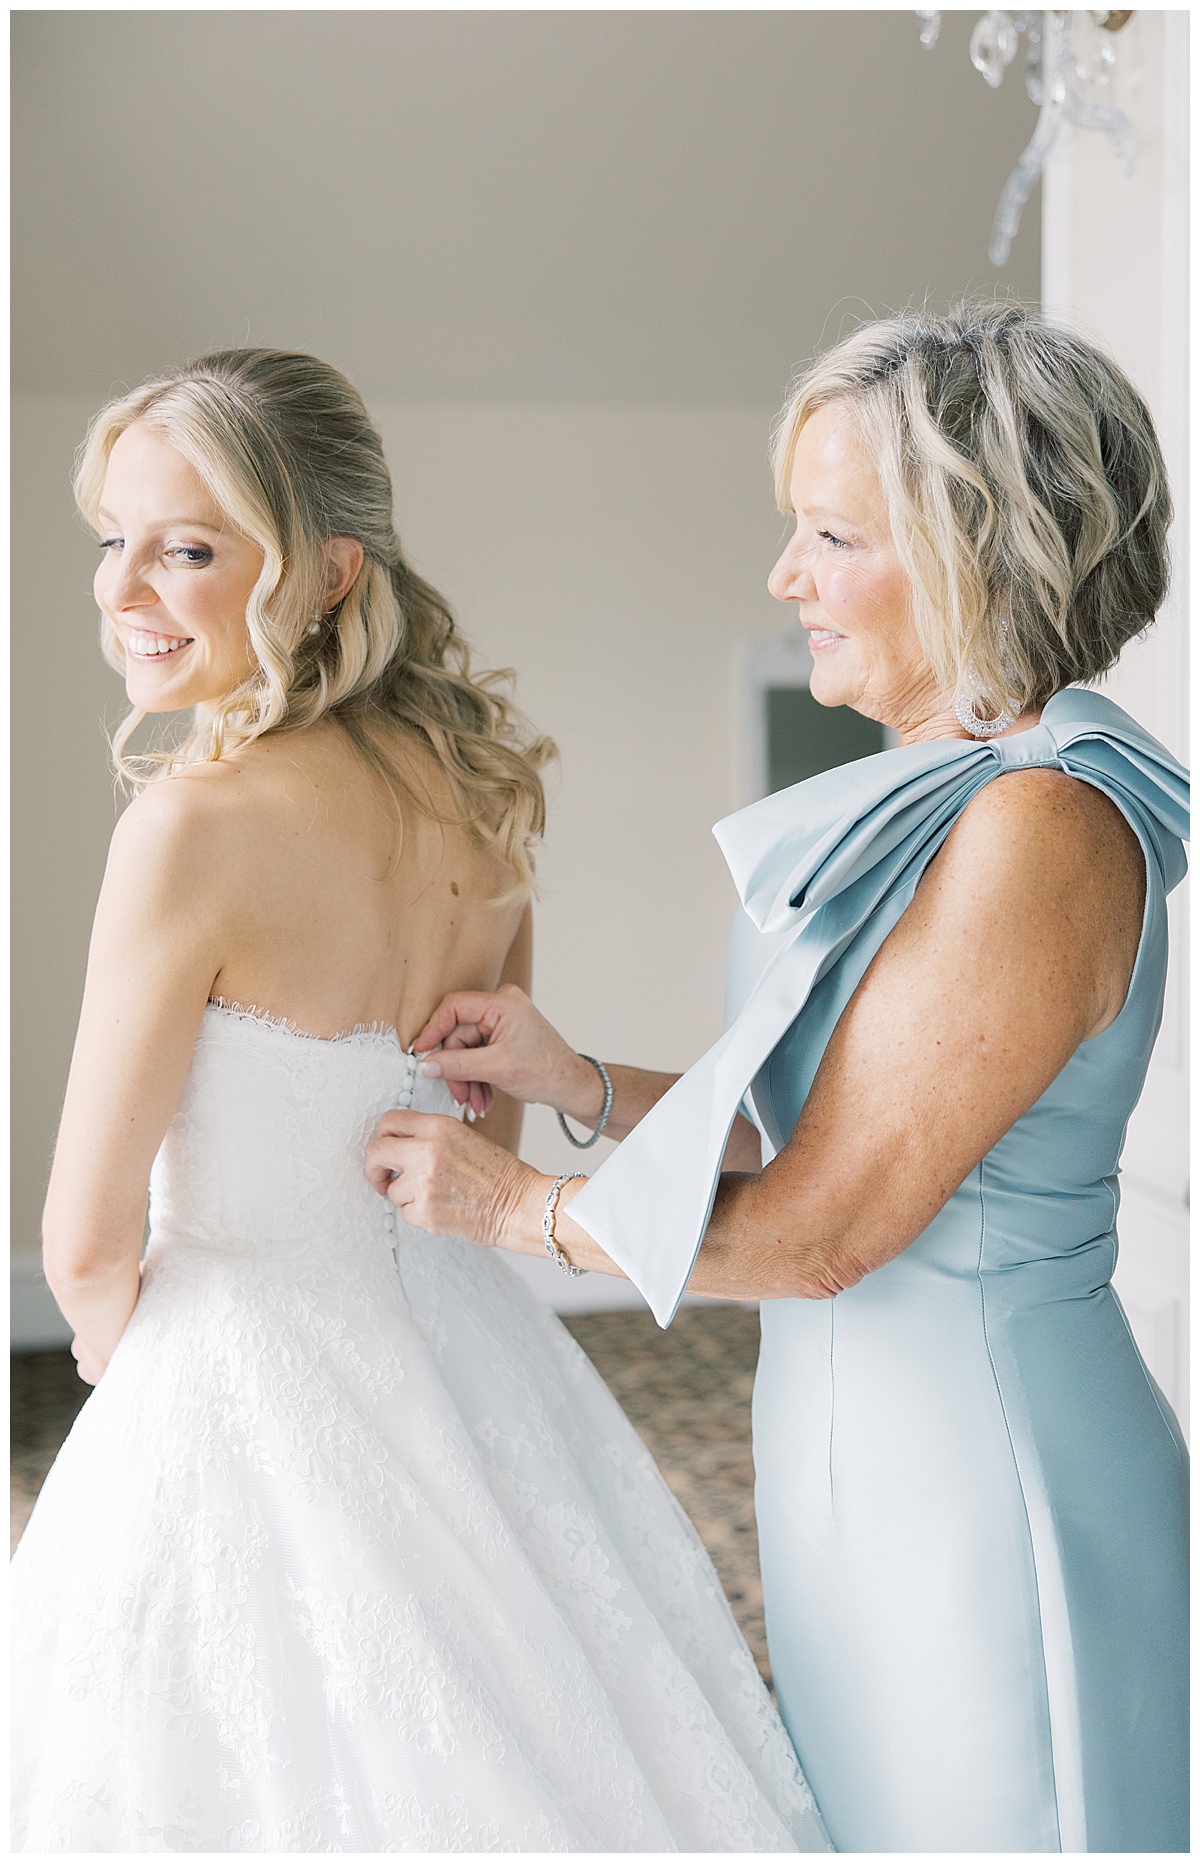 Mom zipping up daughters wedding dress at Trump National Bedminster 